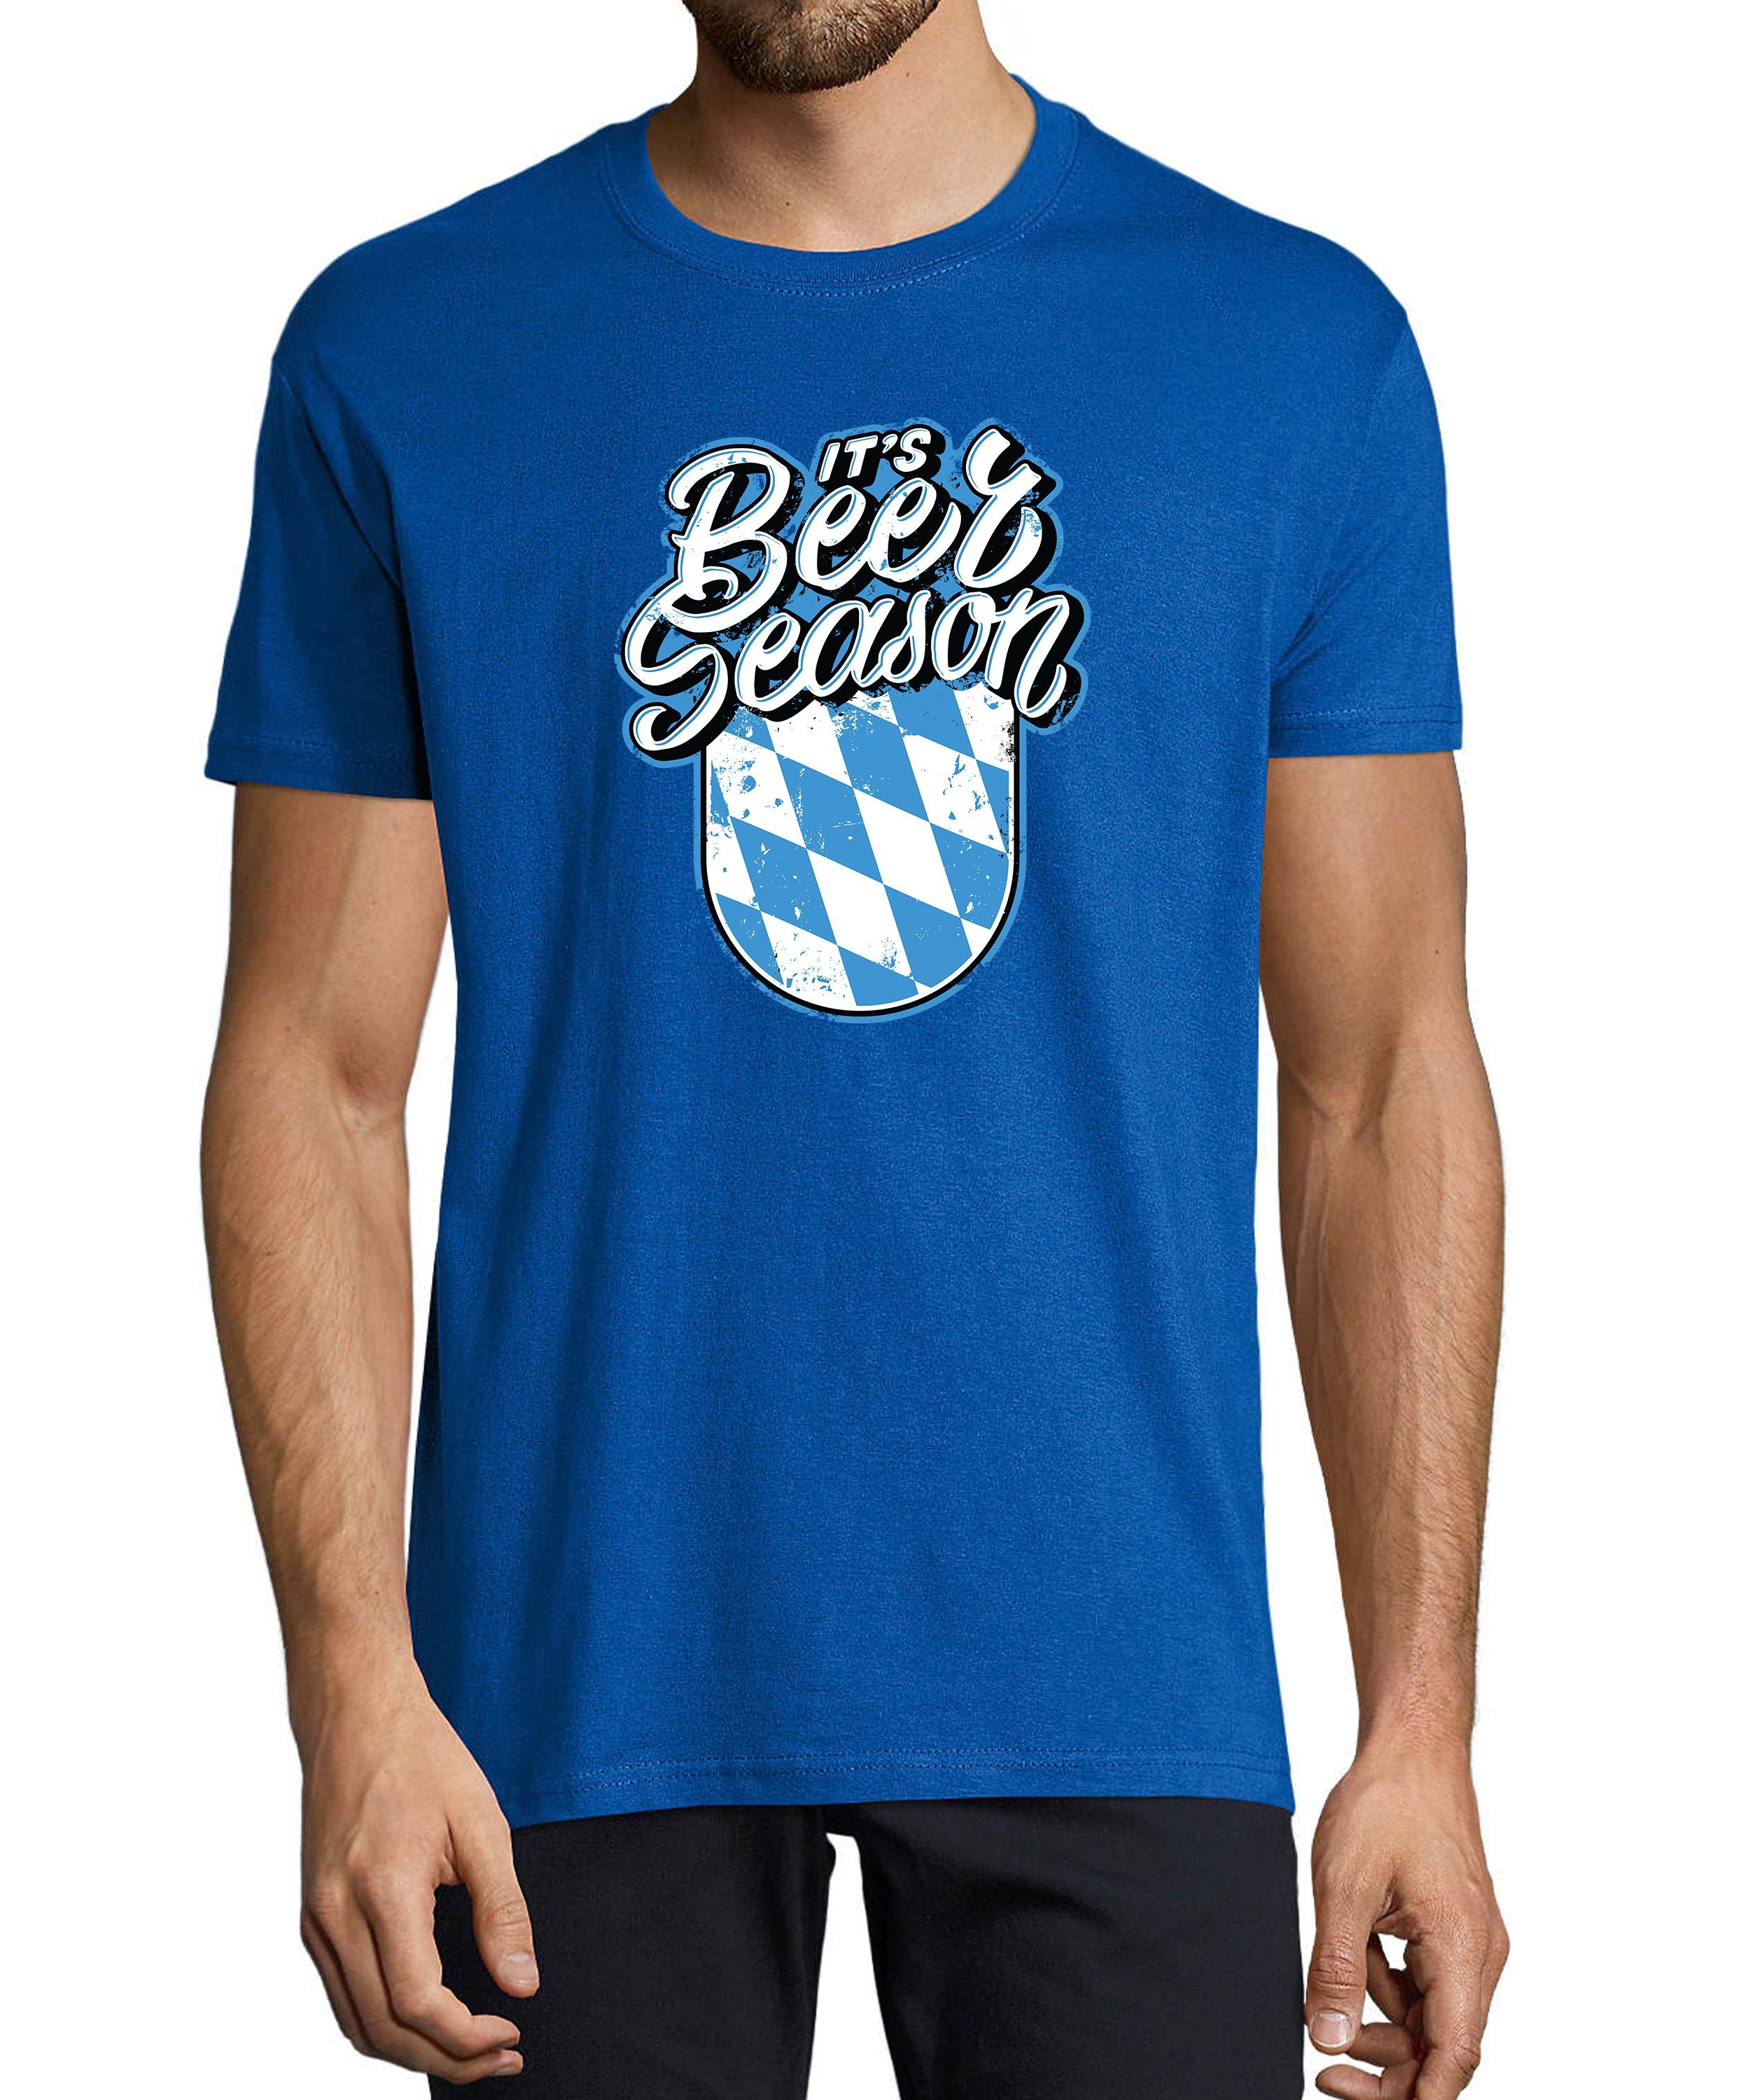 MyDesign24 T-Shirt Herren Fit, Print Trinkshirt mit Season Oktoberfest Regular blau royal Shirt i303 Aufdruck Beer Fun Baumwollshirt its 